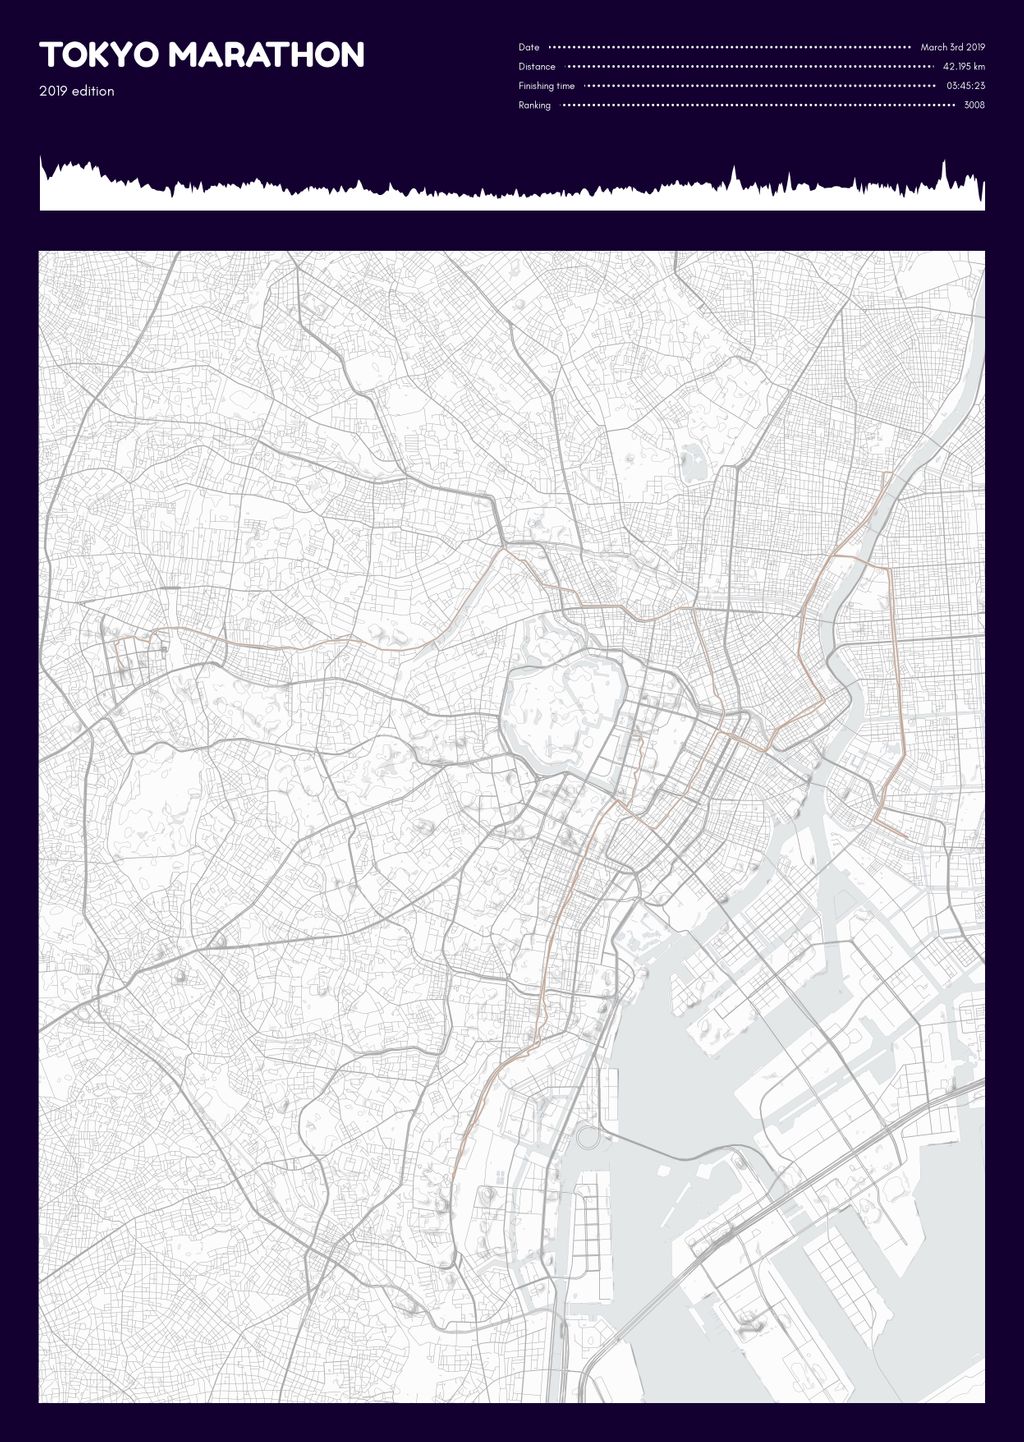 Póster con un mapa de Tokyo Marathon